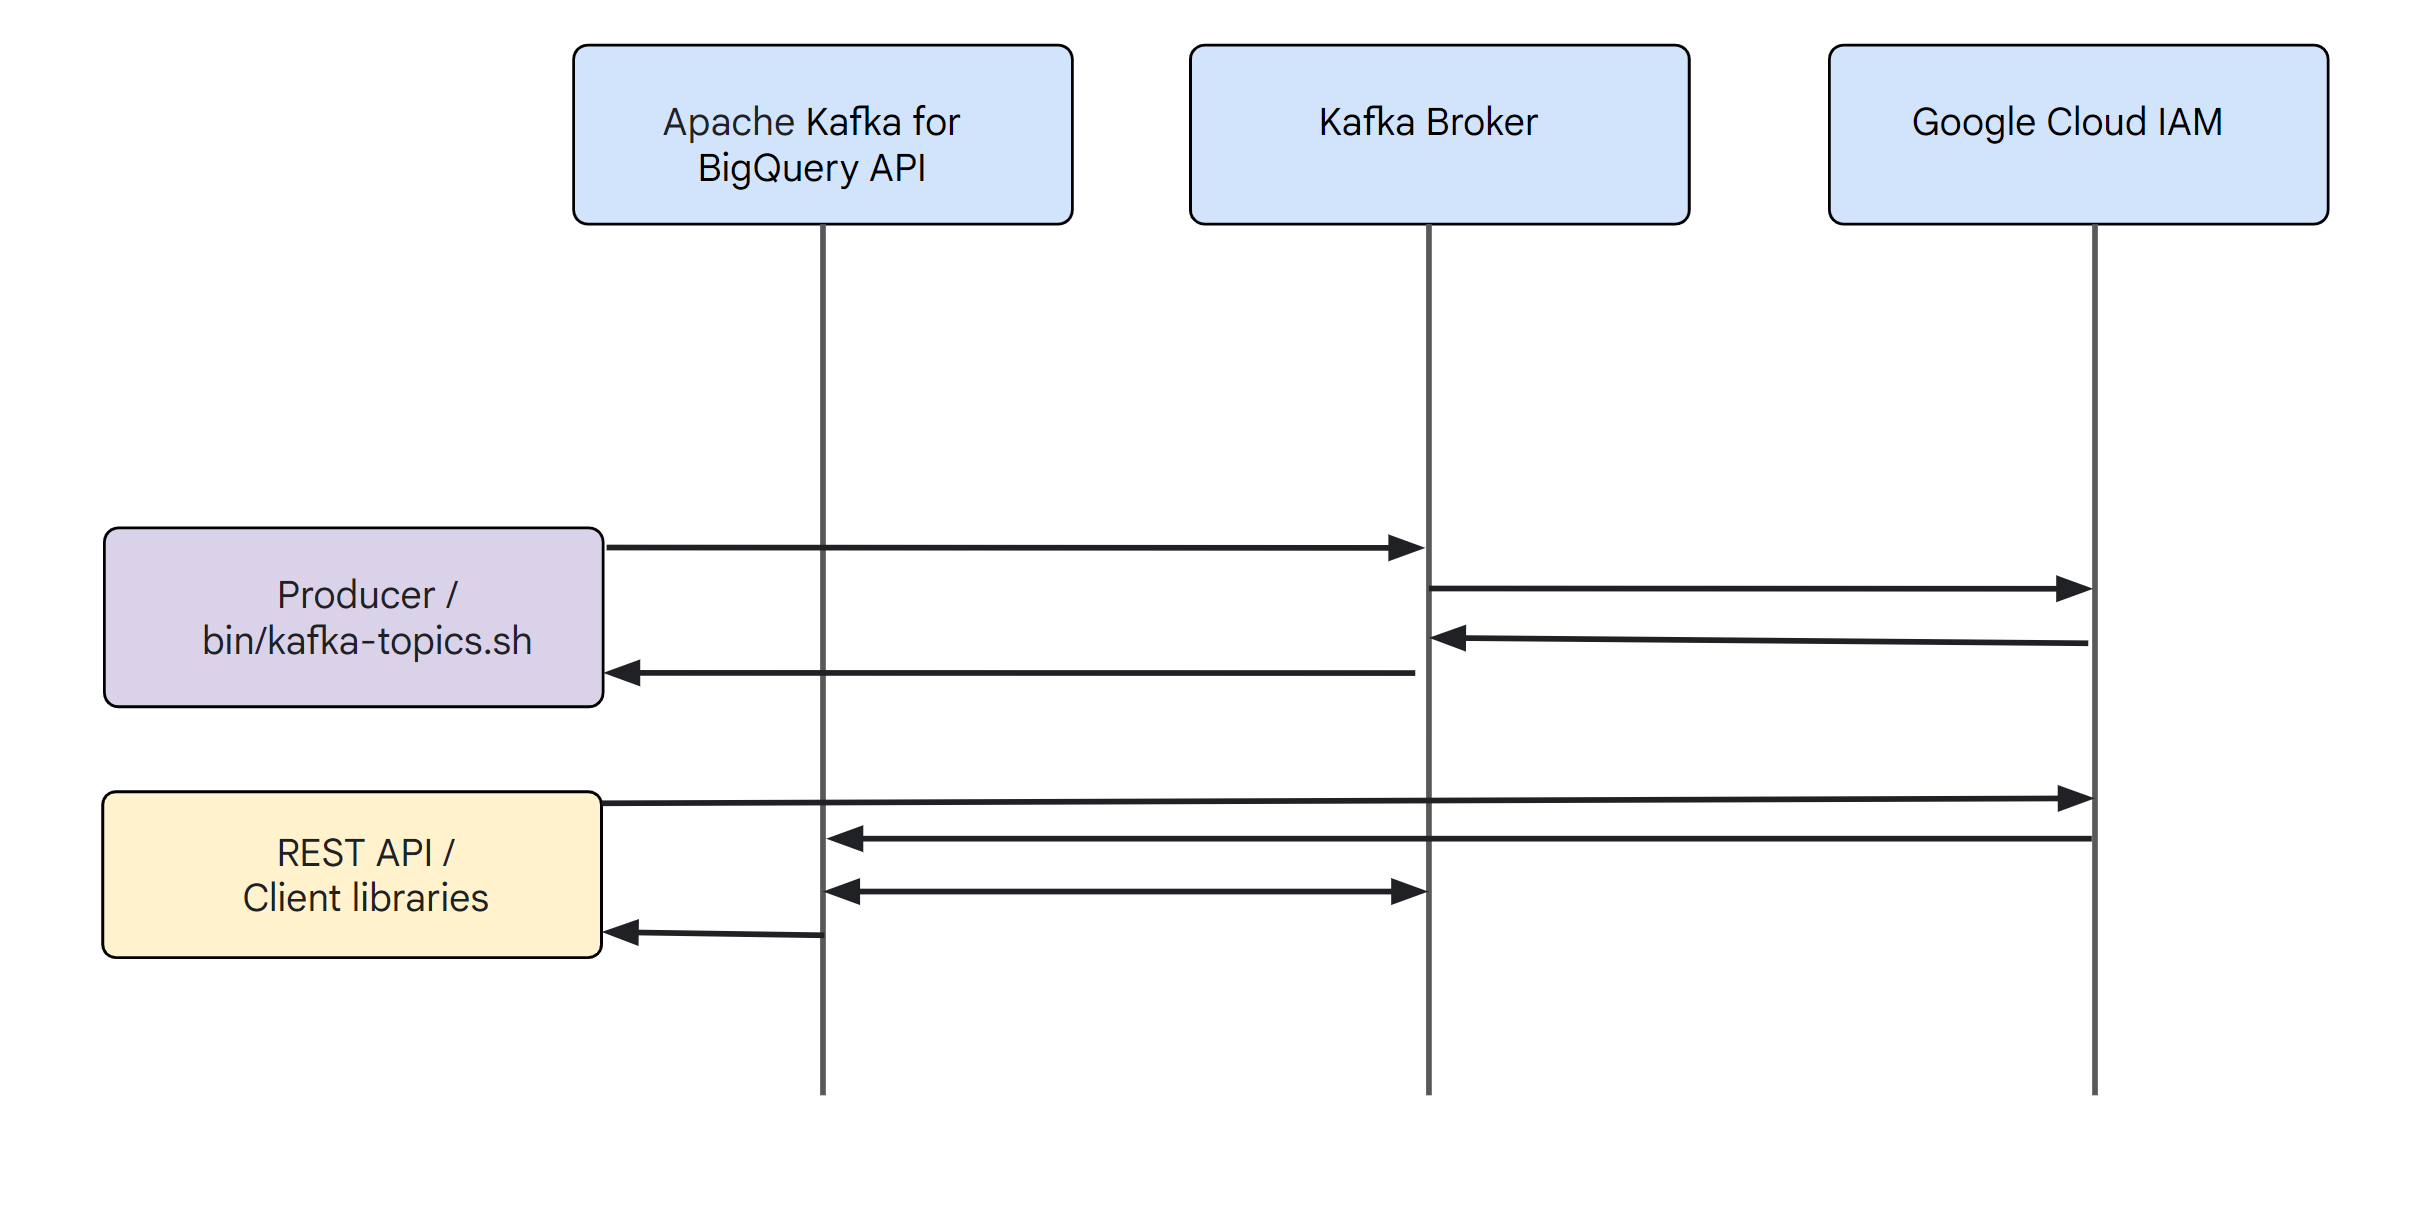 Apache Kafka for BigQuery API with IAM